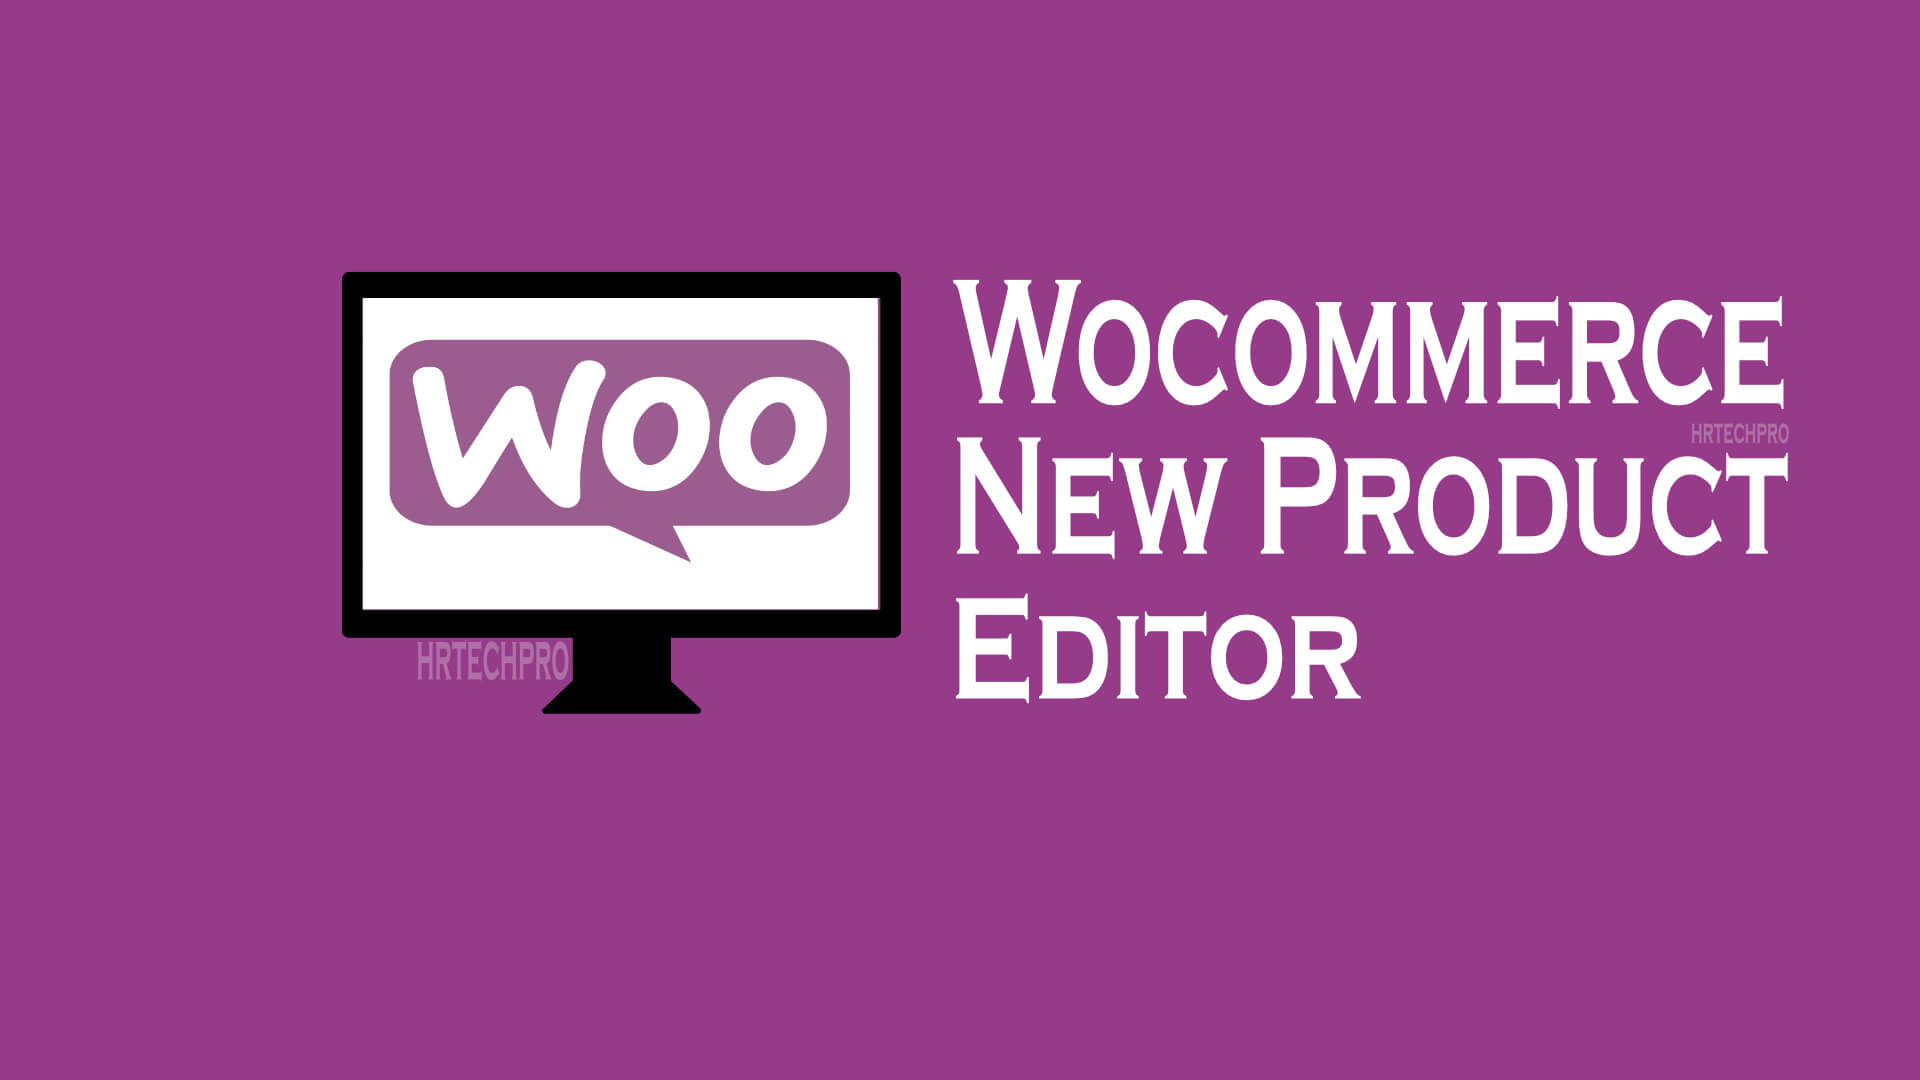 New Woocommerce Product Editor